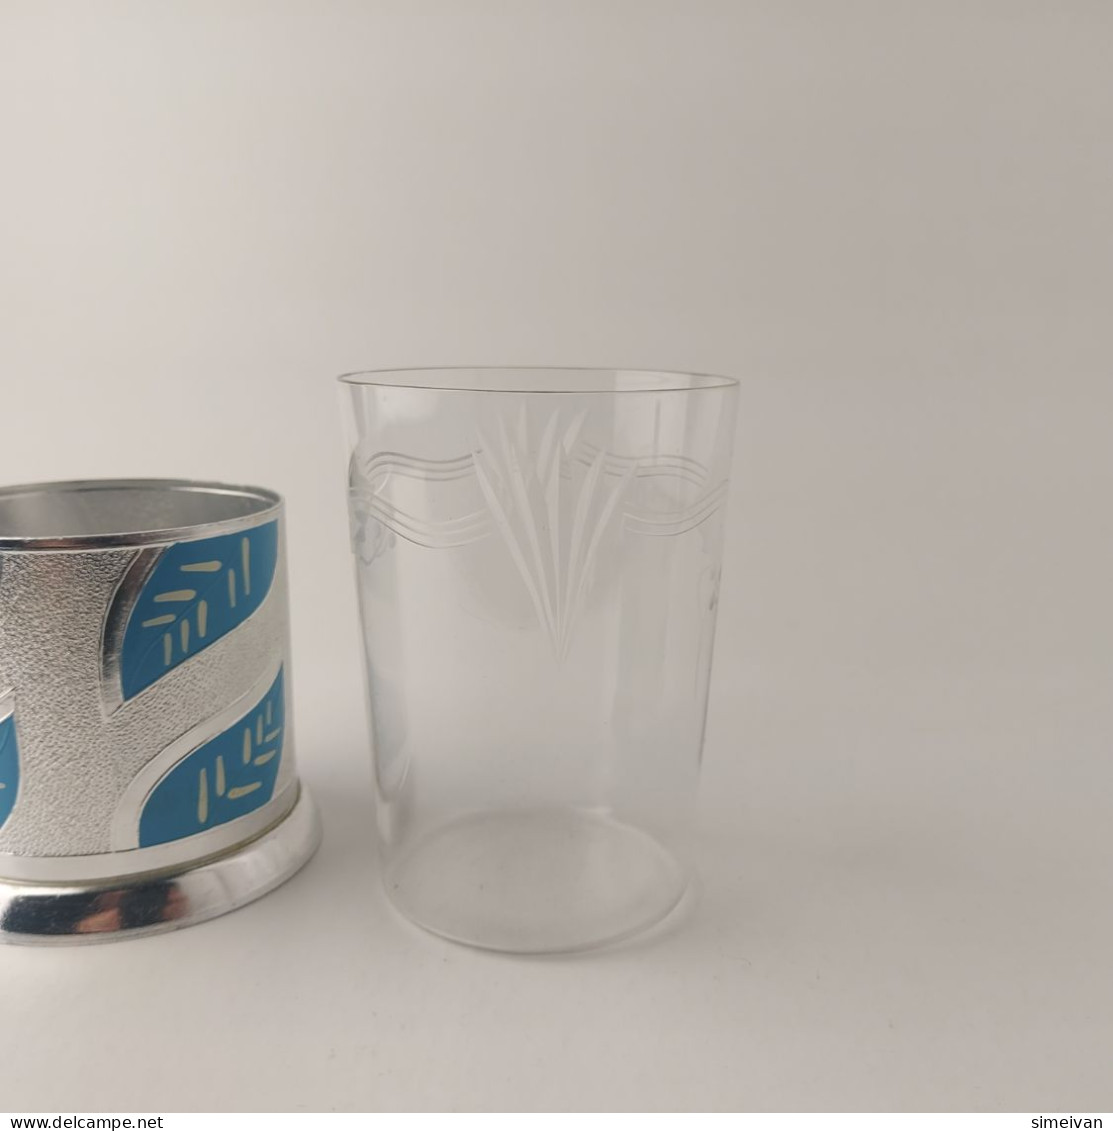 Vintage Soviet Russian Podstakannik Tea Cup Holder with Glass USSR #5516